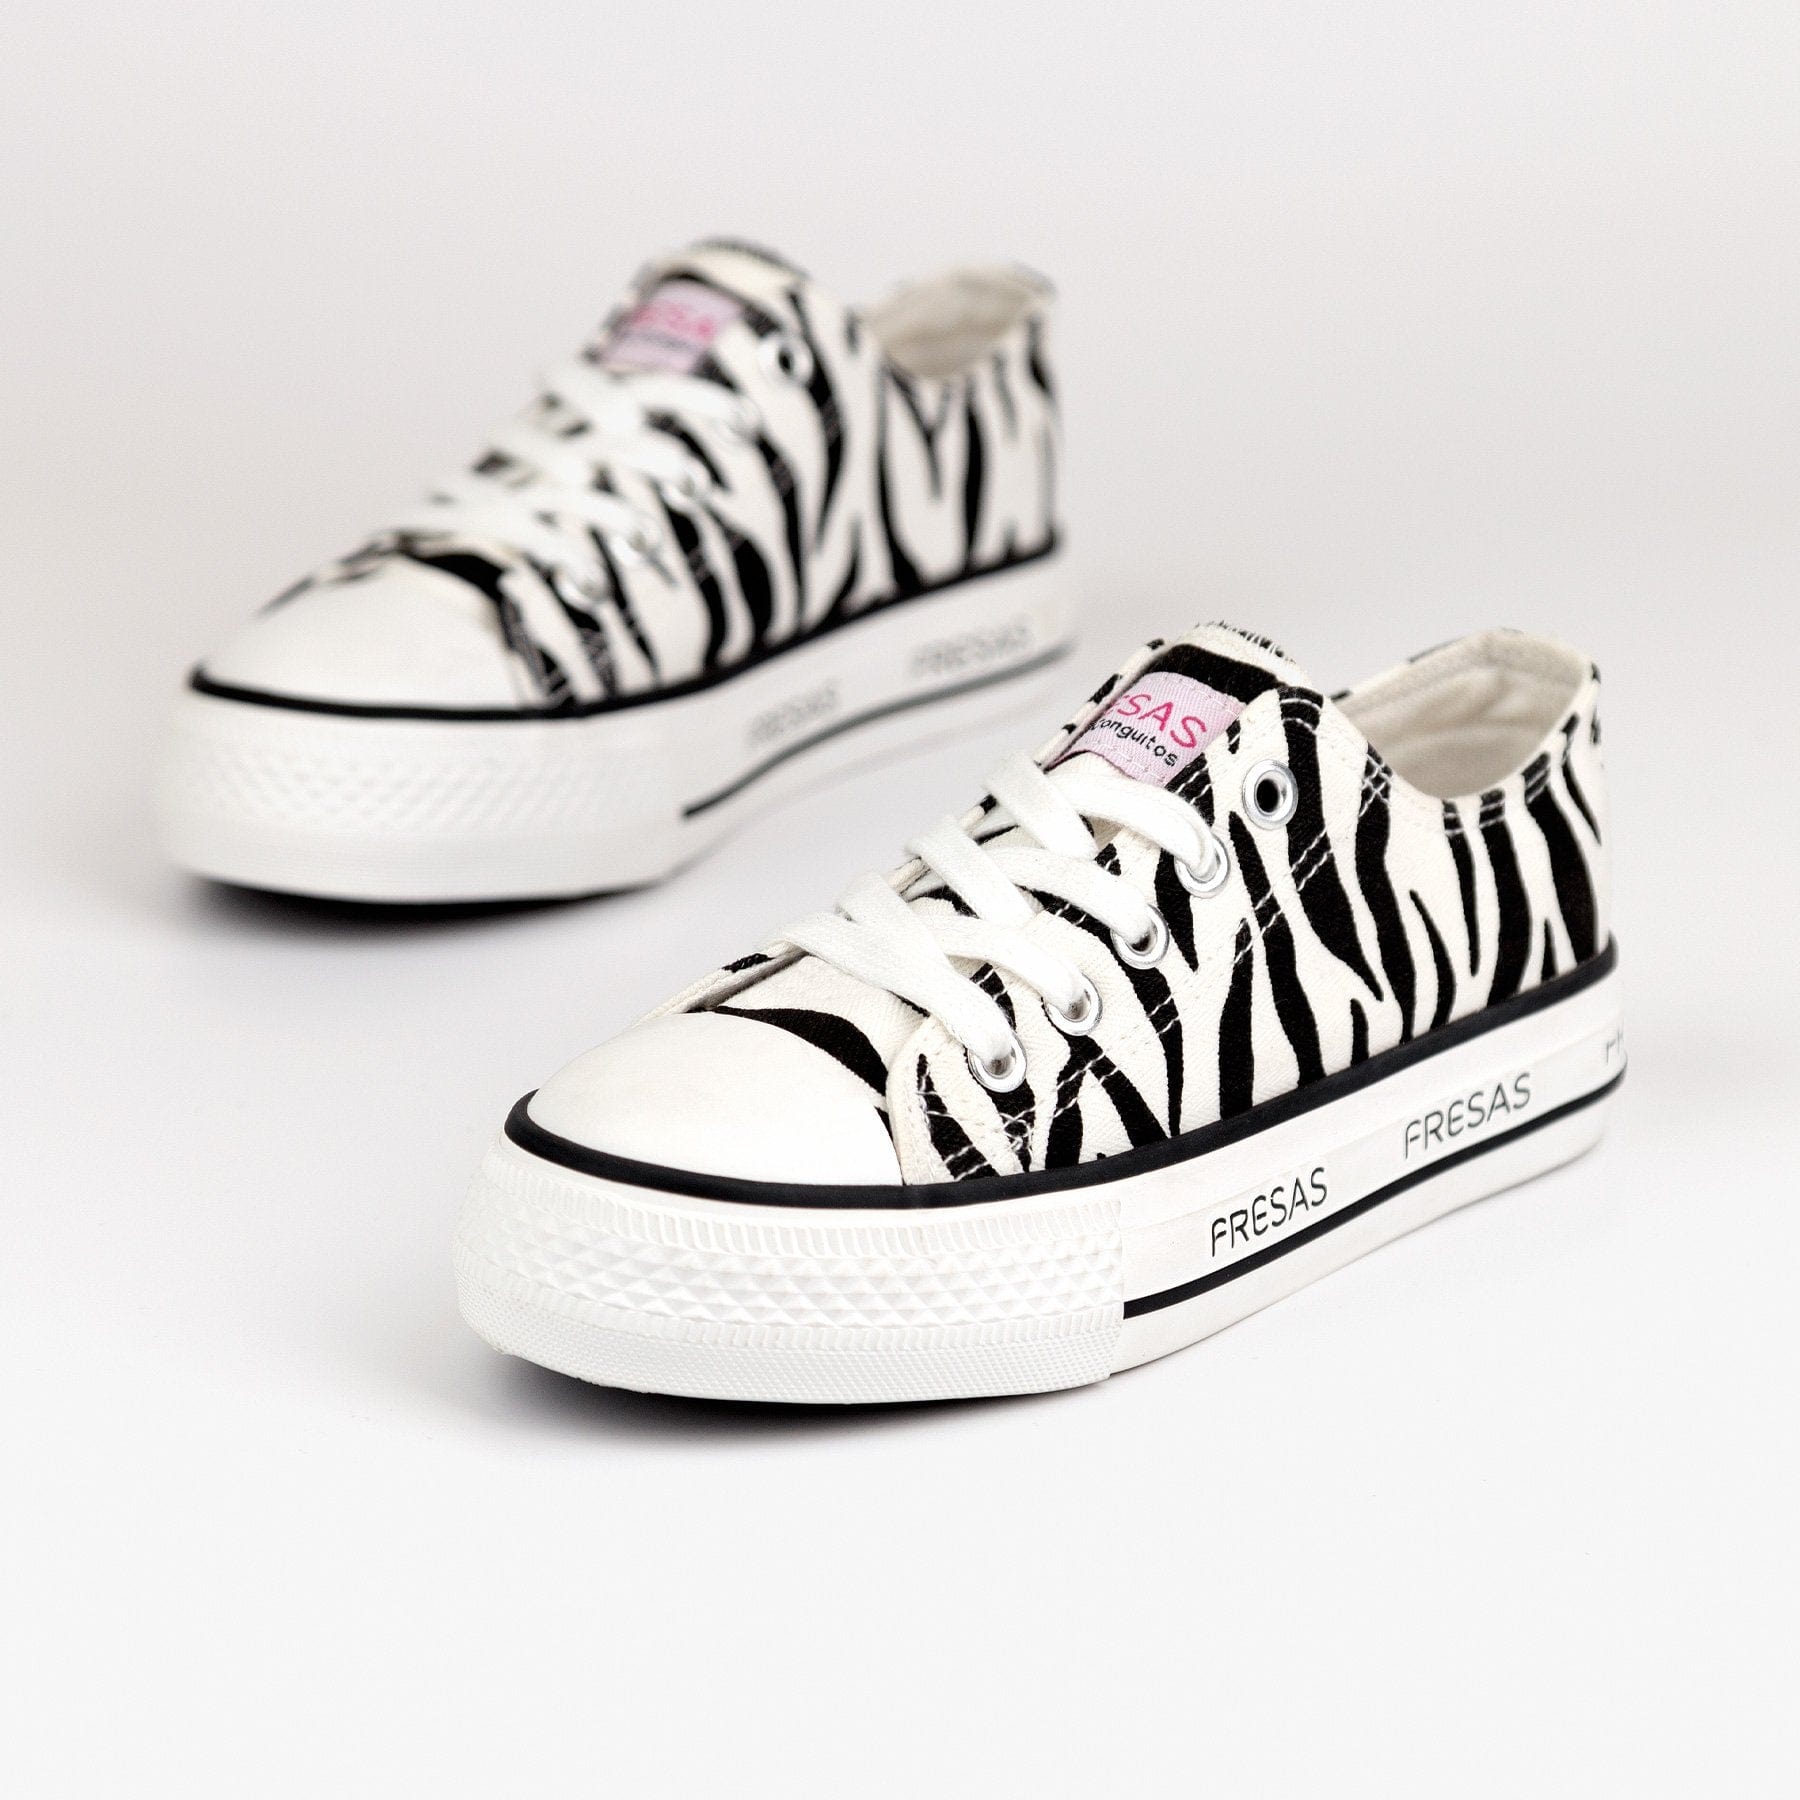 FRESAS CON NATA Shoes Girl's Zebra Canvas Platform Sneakers